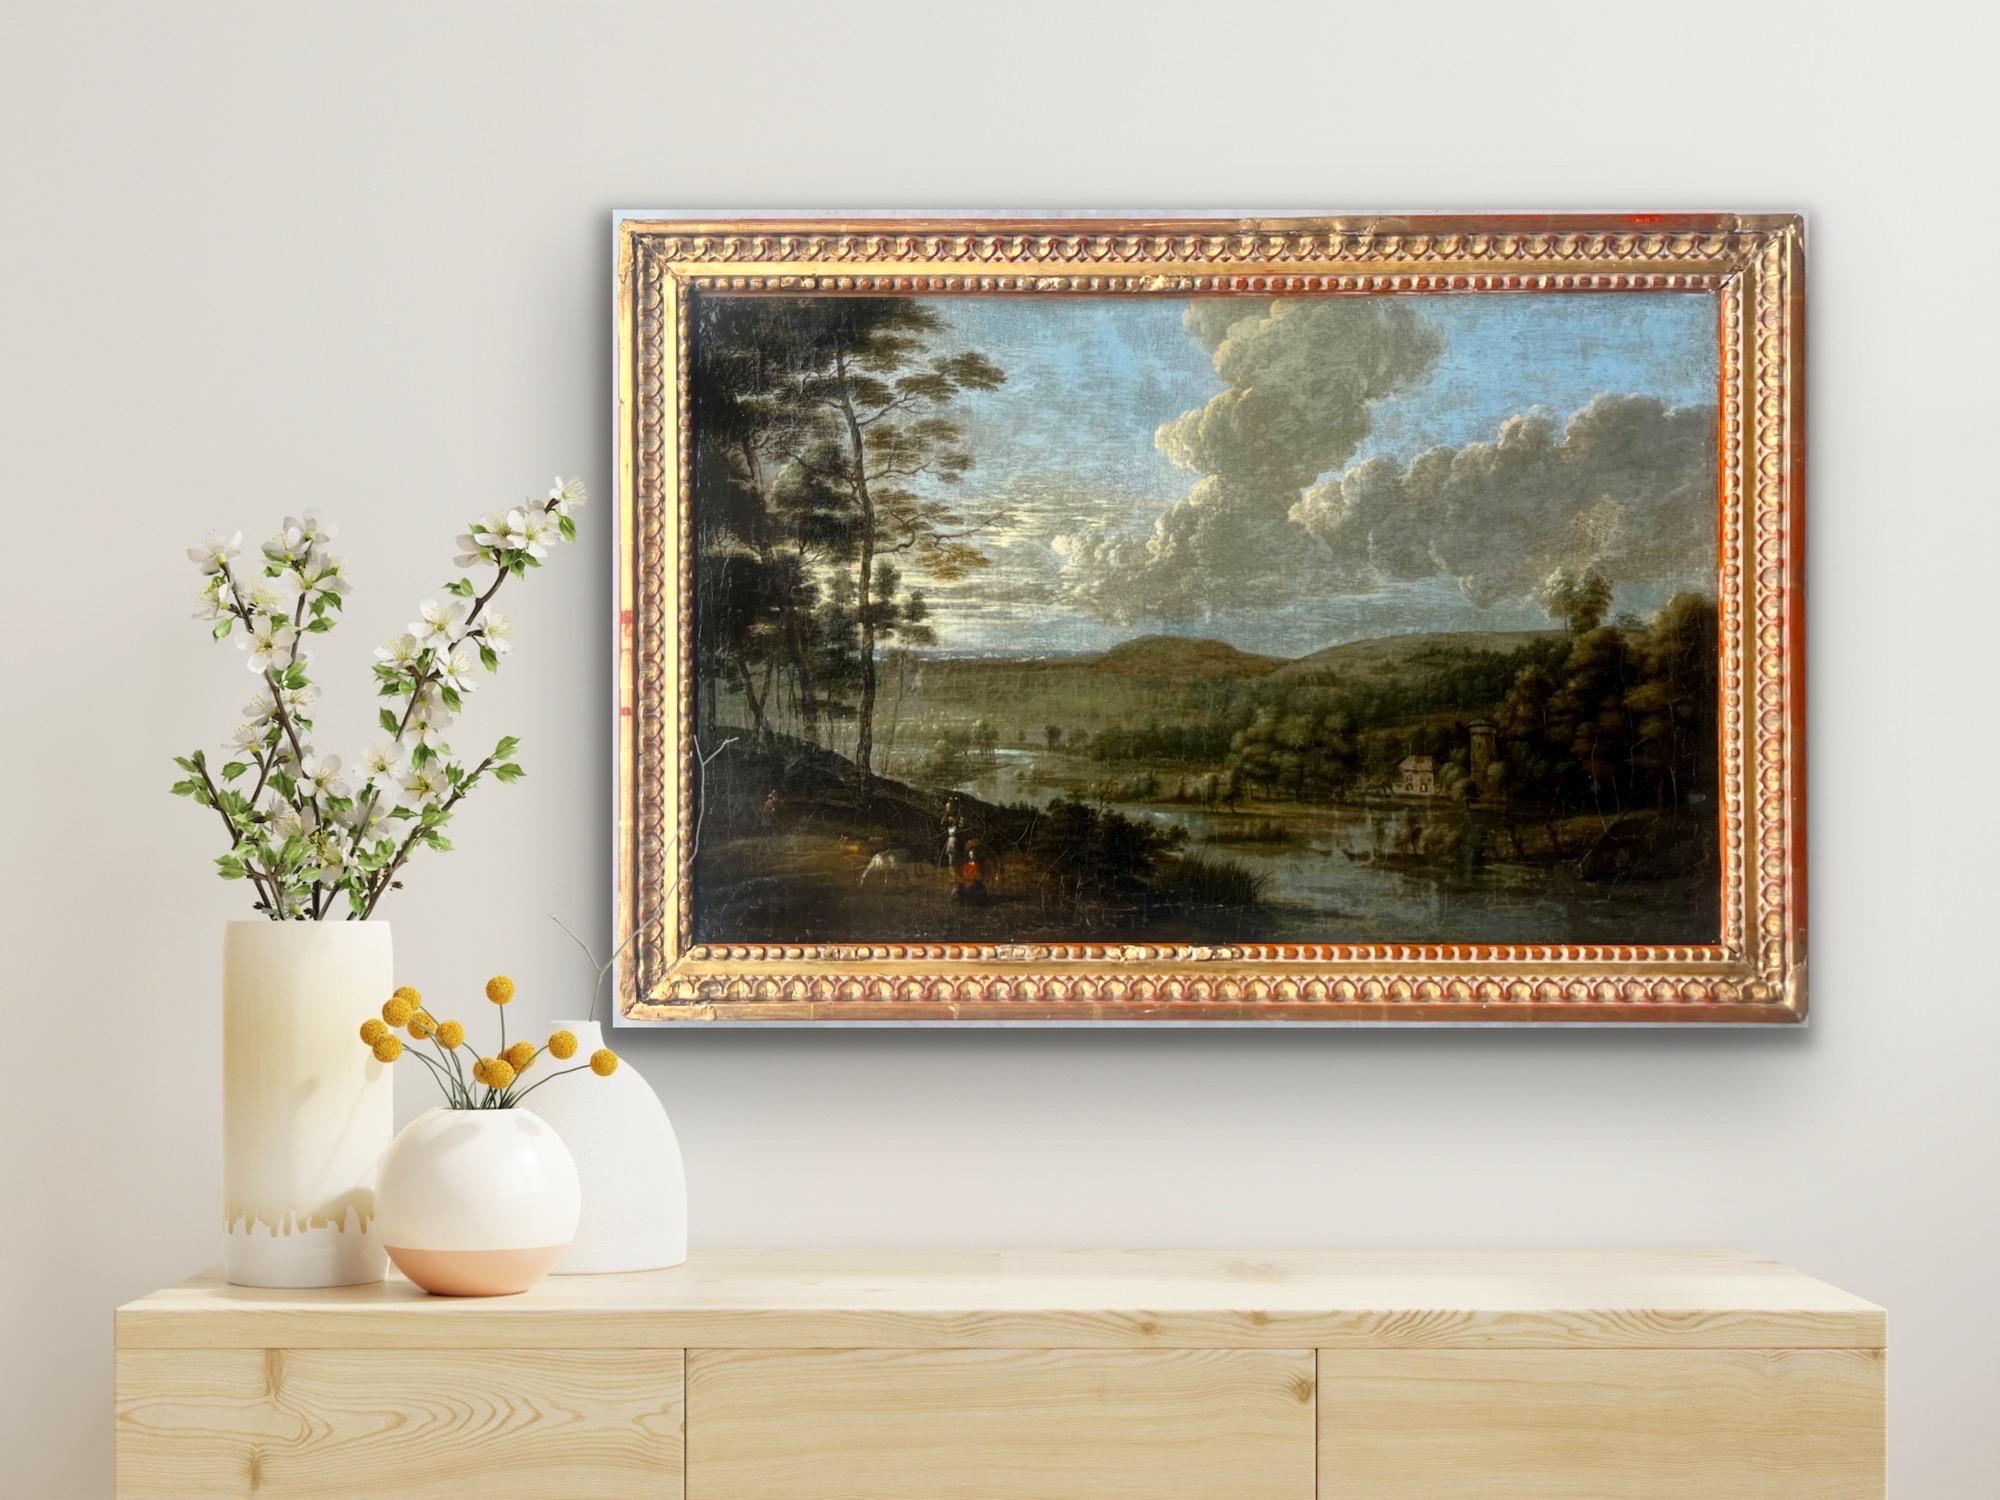 17th century Flemish Old Master painting - Countryside landscape - Rubens 2